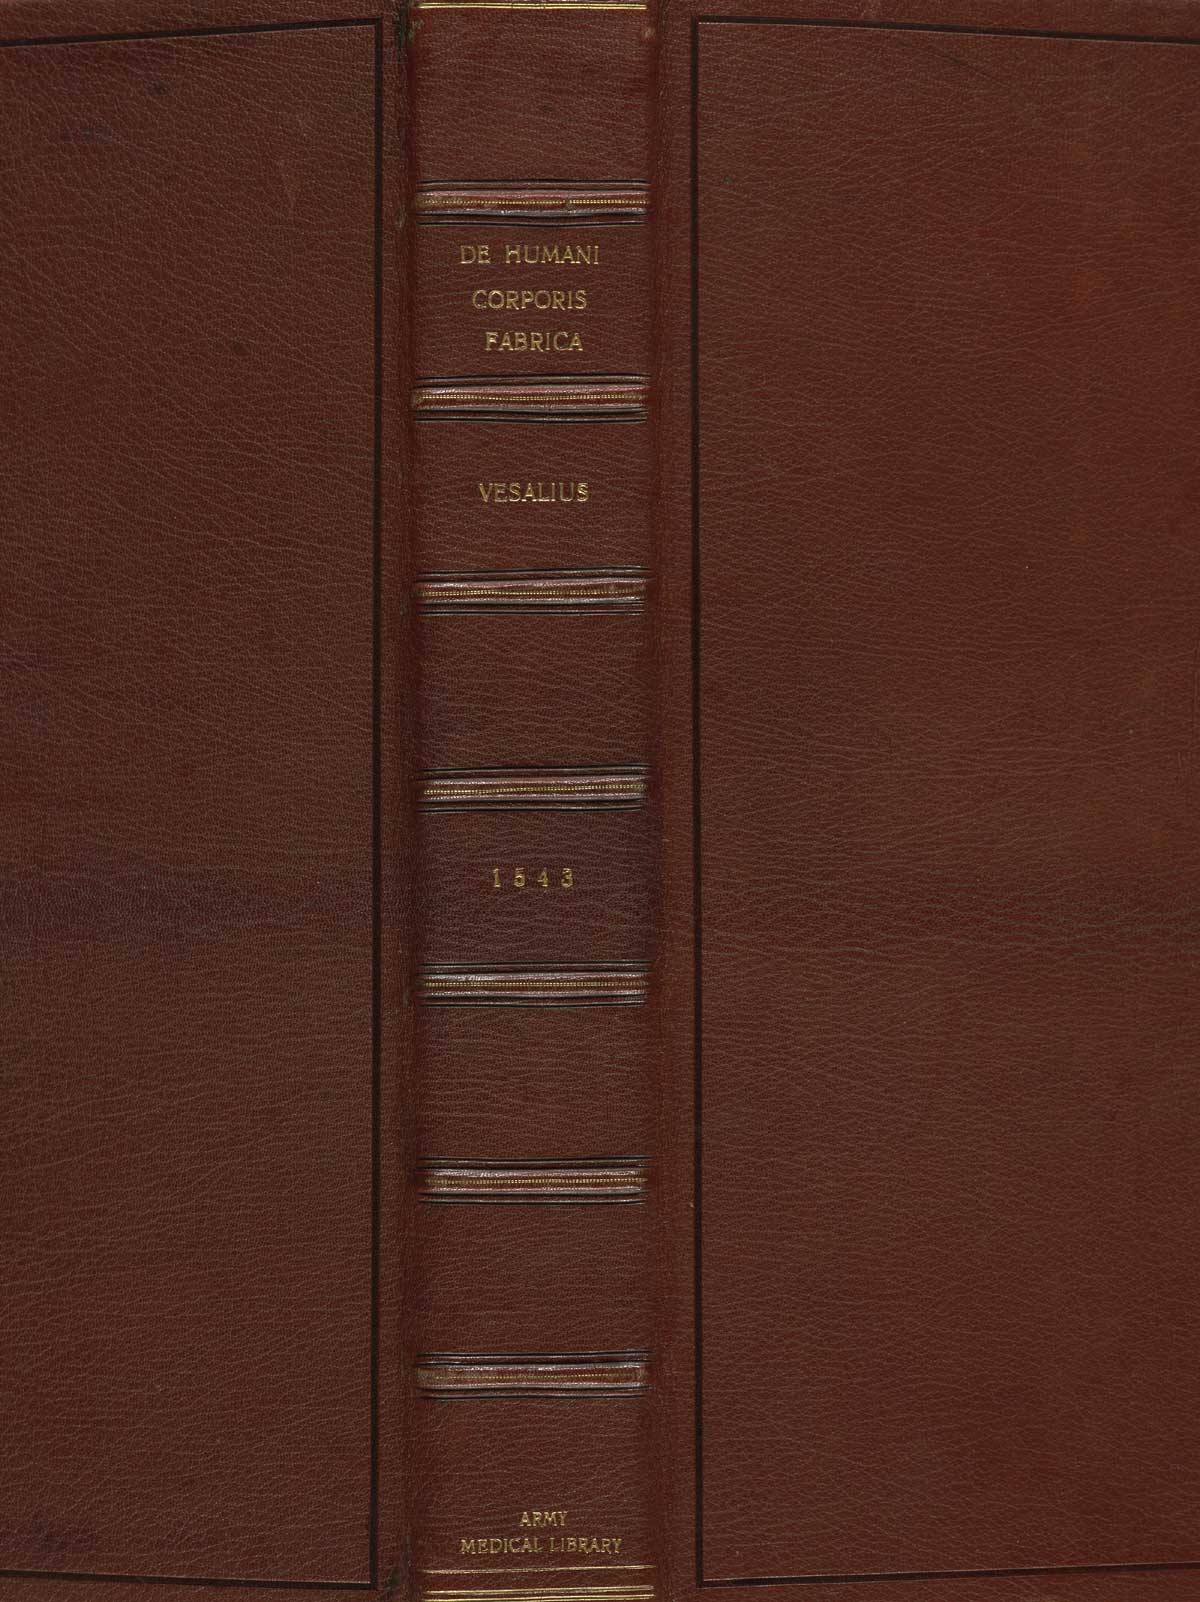 The spine of Andreas Vesalius' De corporis humani fabrica libri septem.